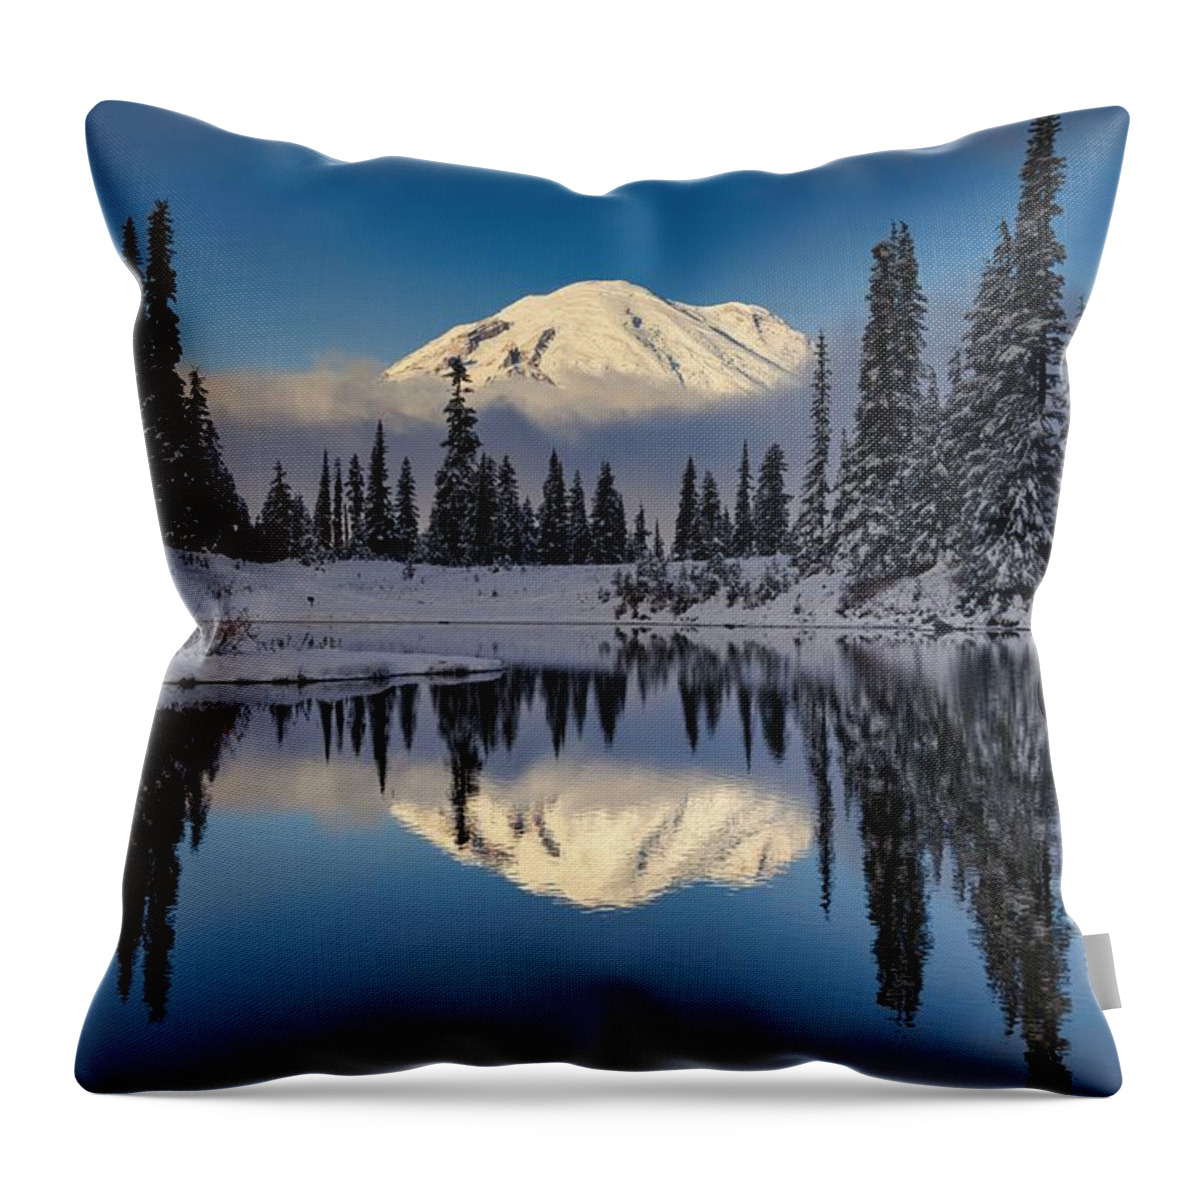 First Snow On Mount Rainier Throw Pillow featuring the photograph First Snow on Mount Rainier by Lynn Hopwood